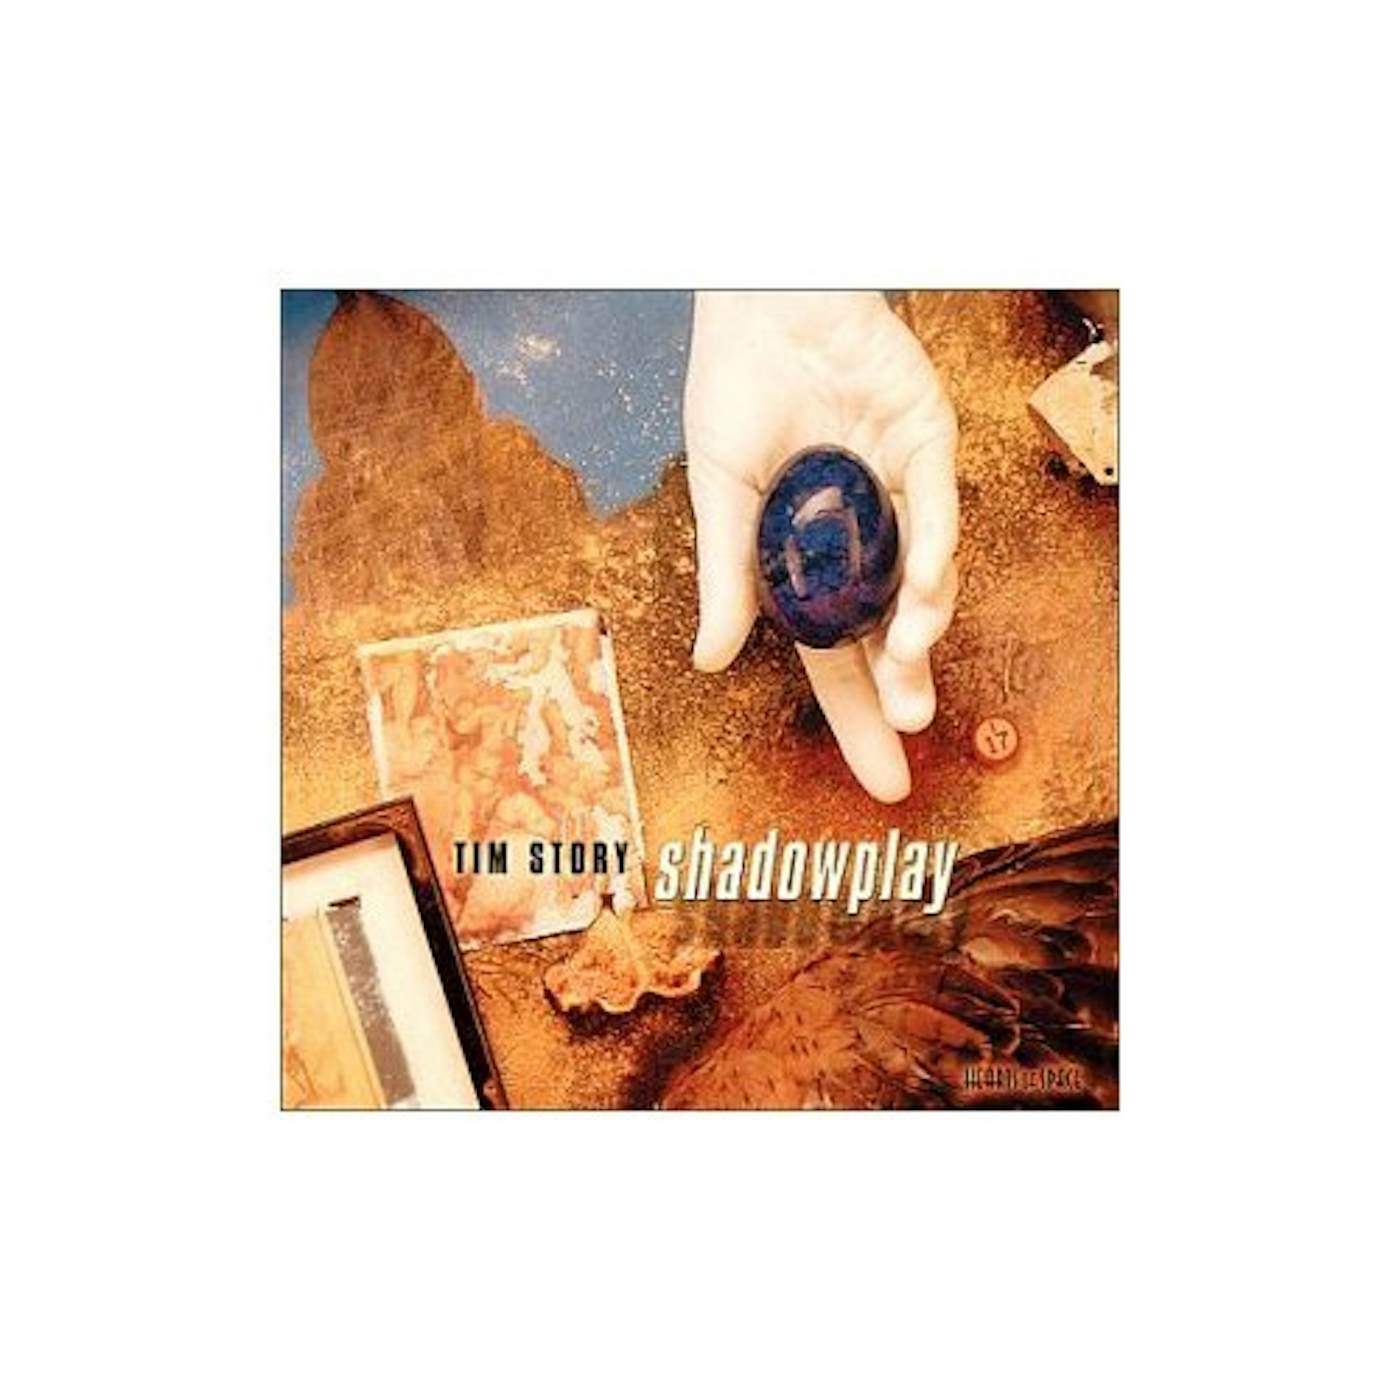 Tim Story SHADOWPLAY CD